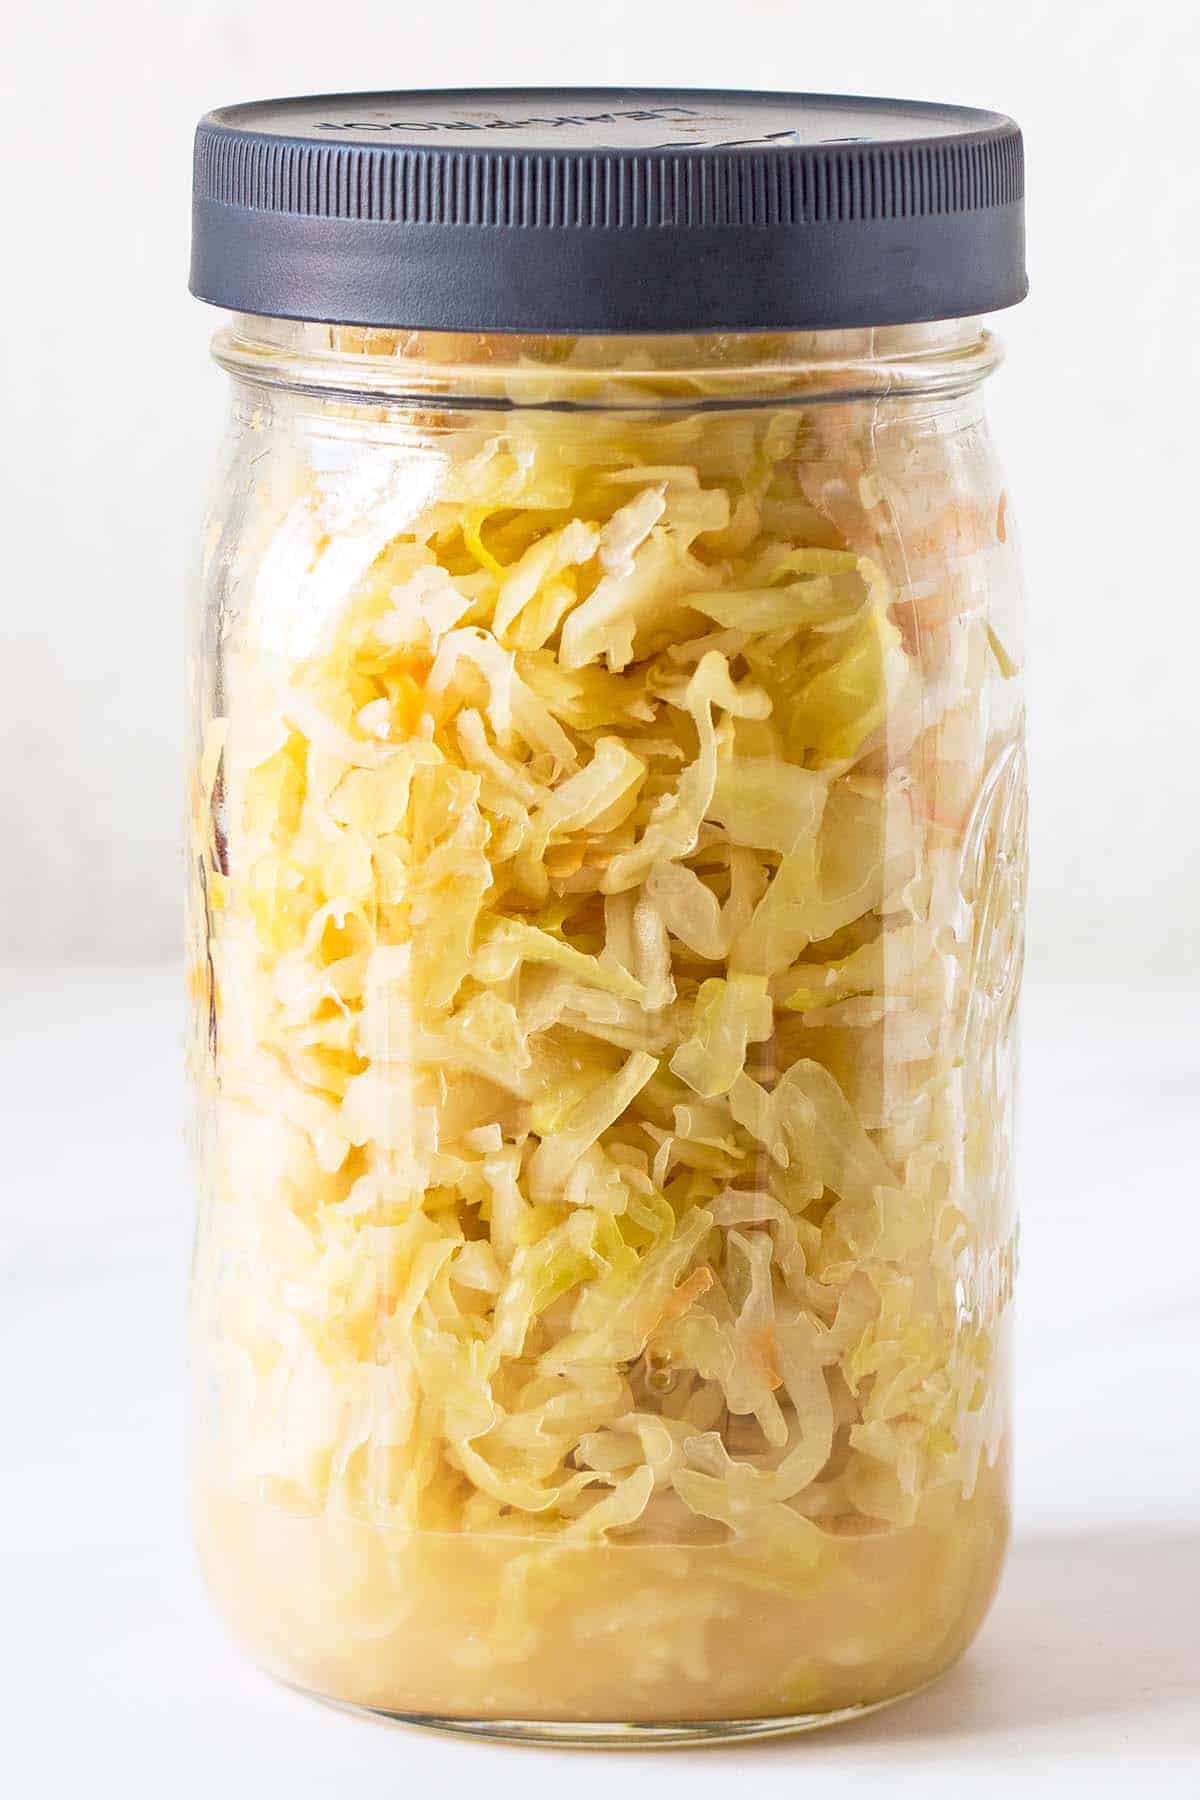 sauerkraut transferred to glass jar